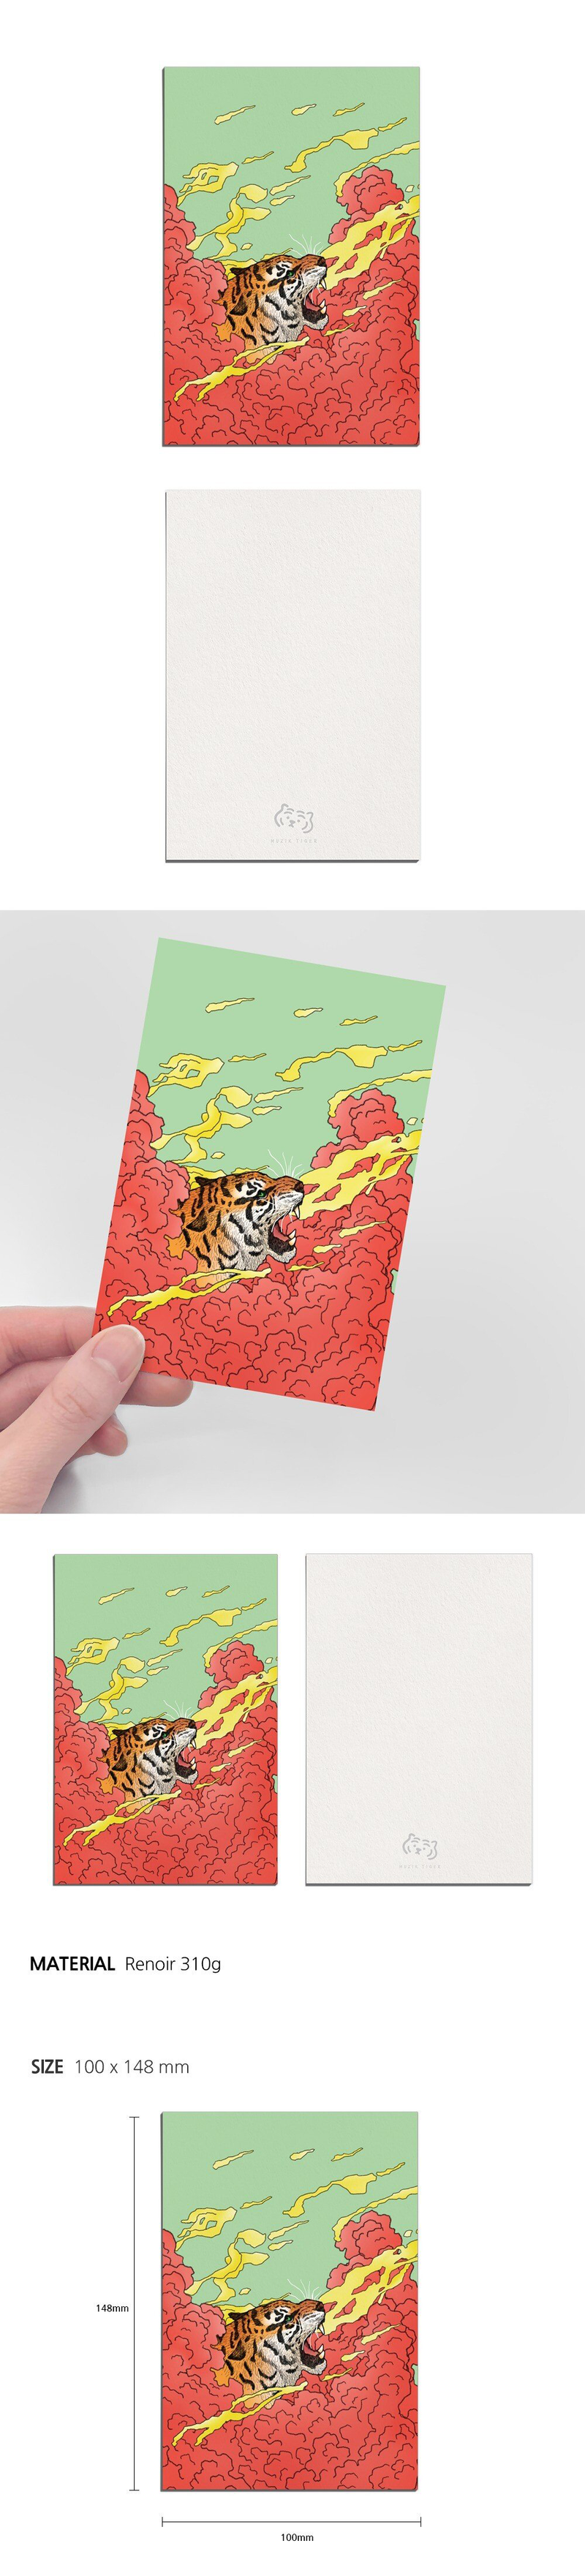 Legendary tiger ポストカード